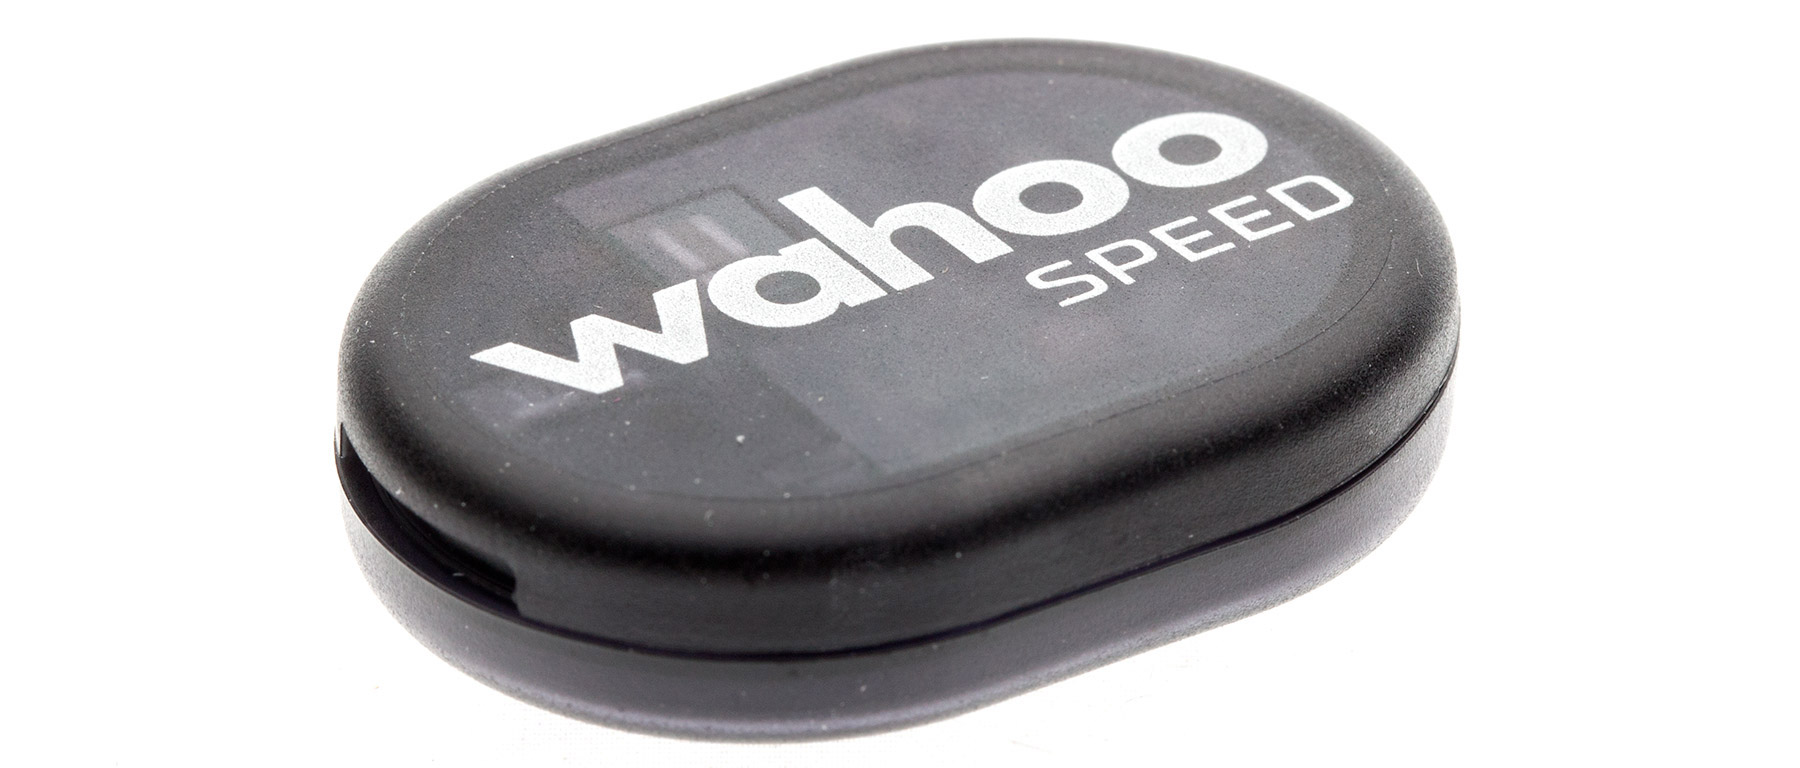 Wahoo RPM Cycling Speed Sensor